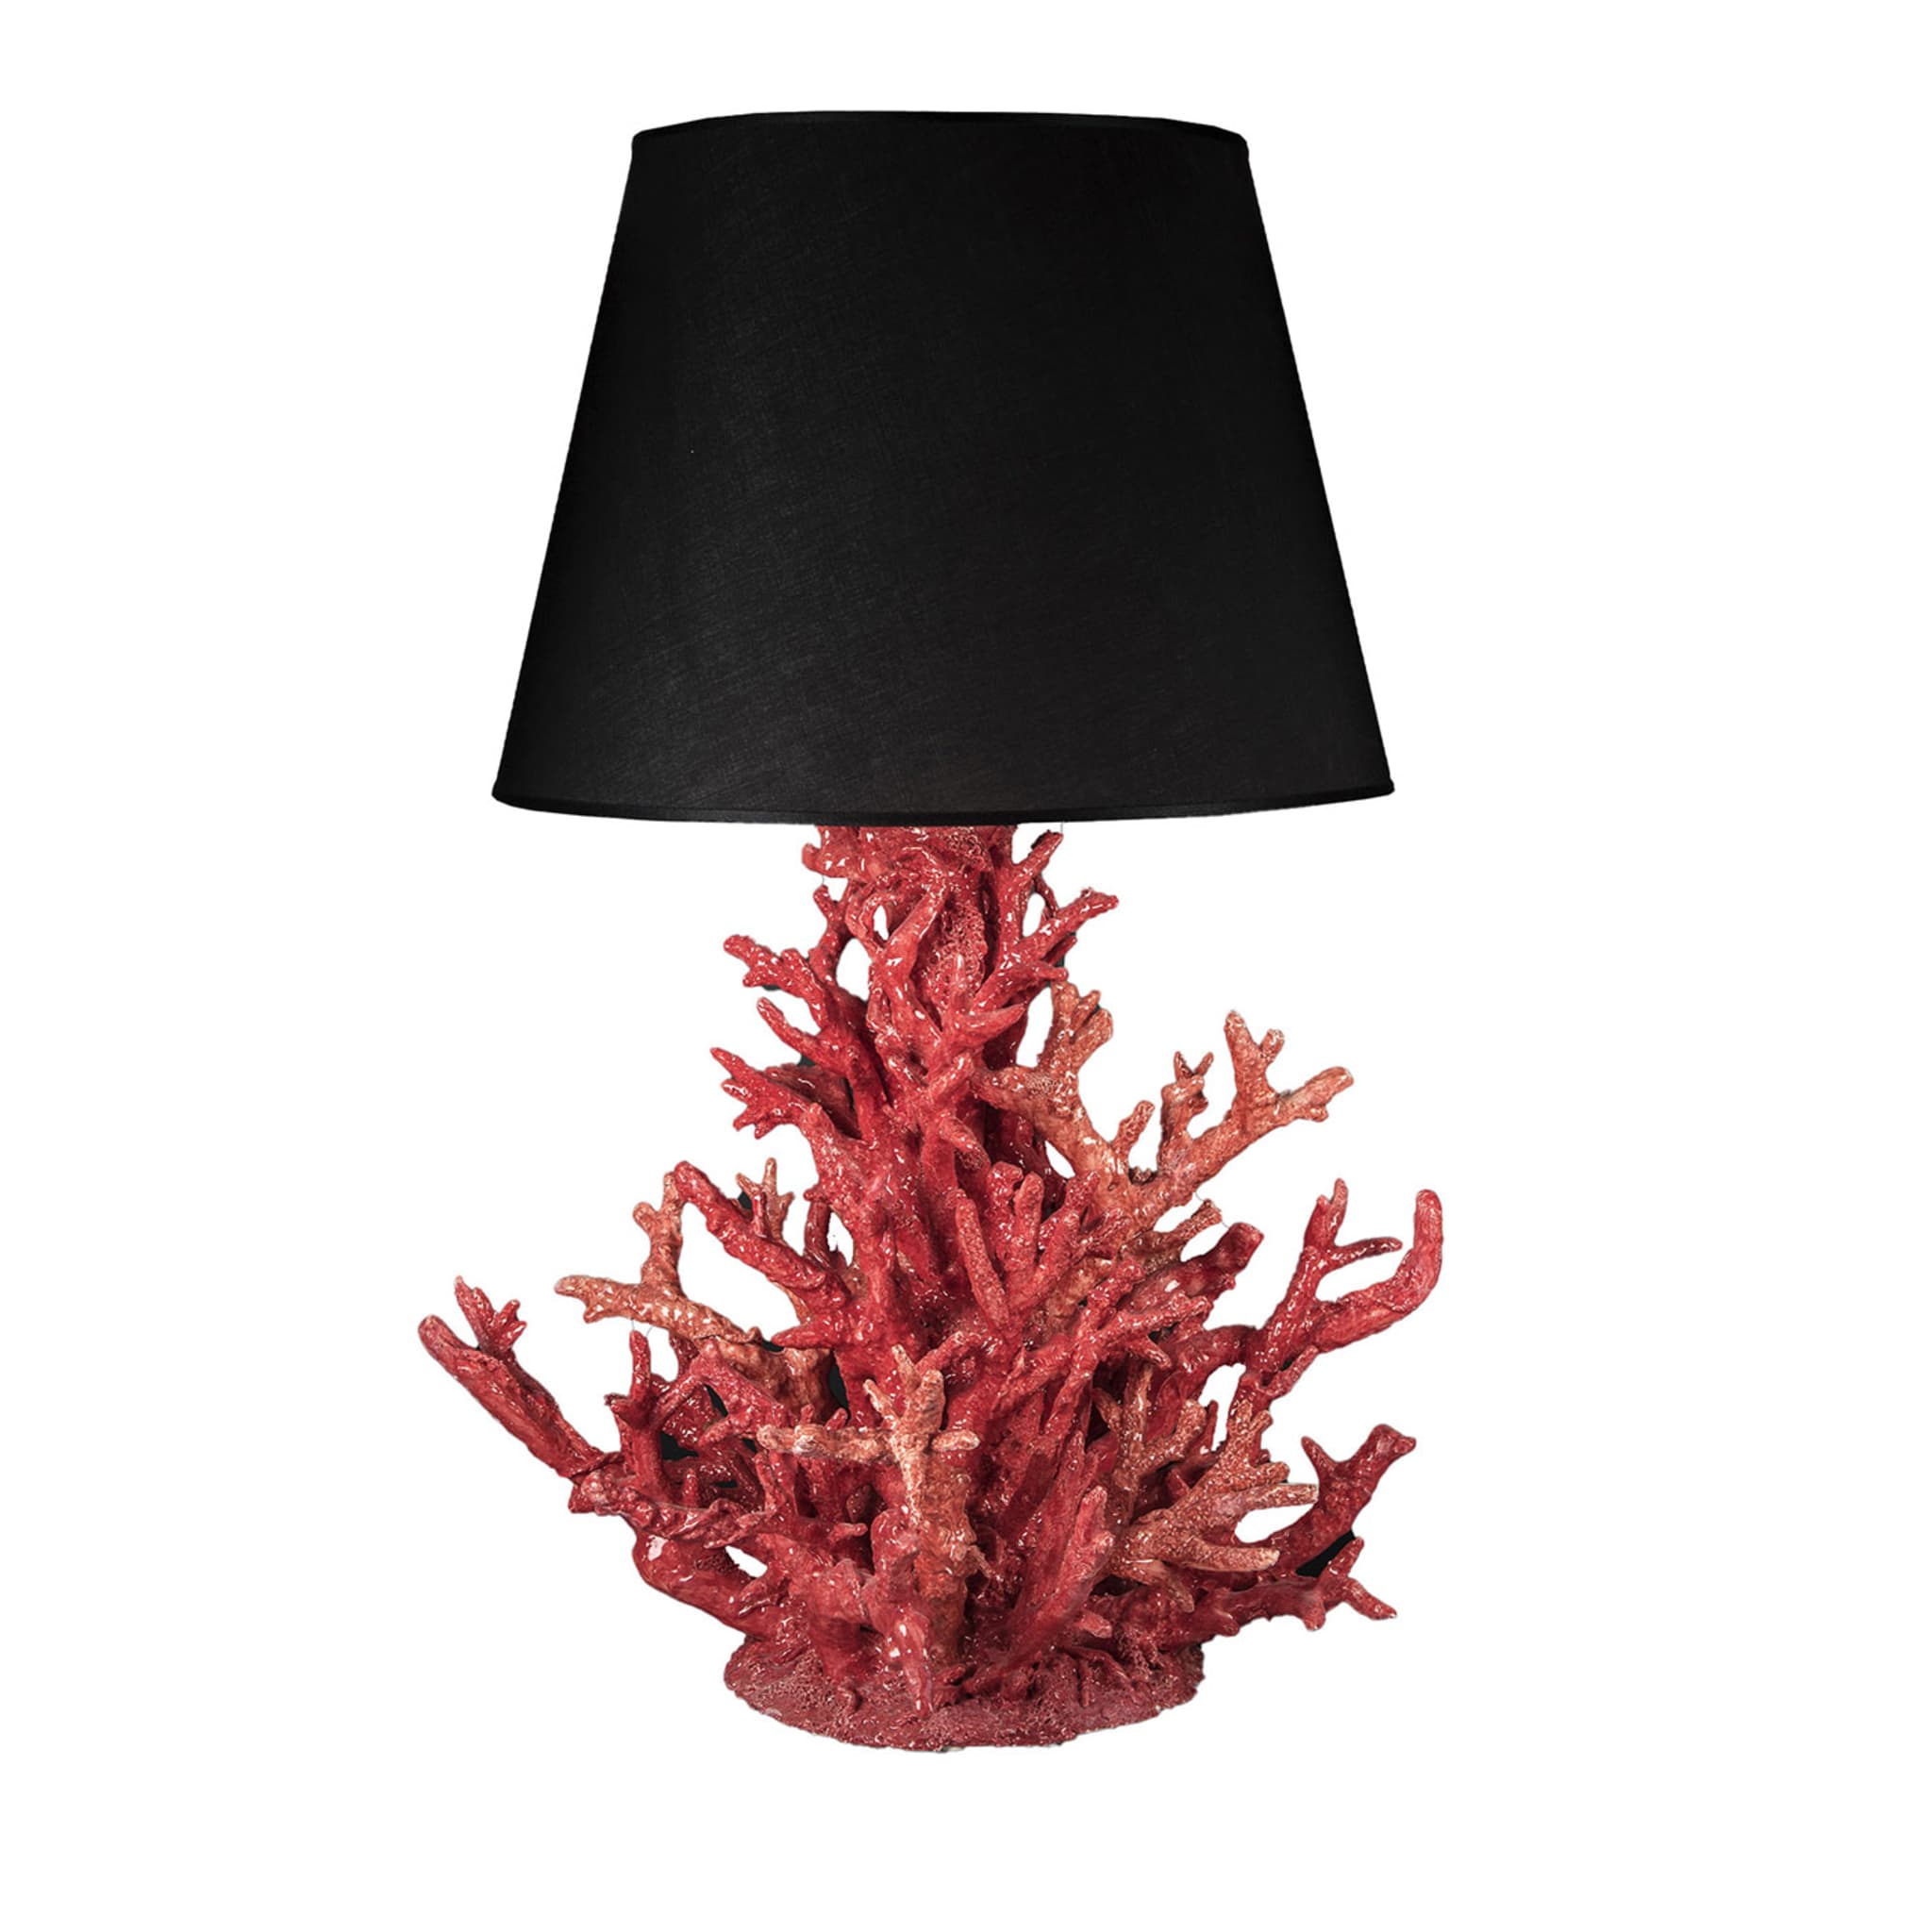 Coralli Coral & Black Table Lamp by Antonio Fullin - Main view